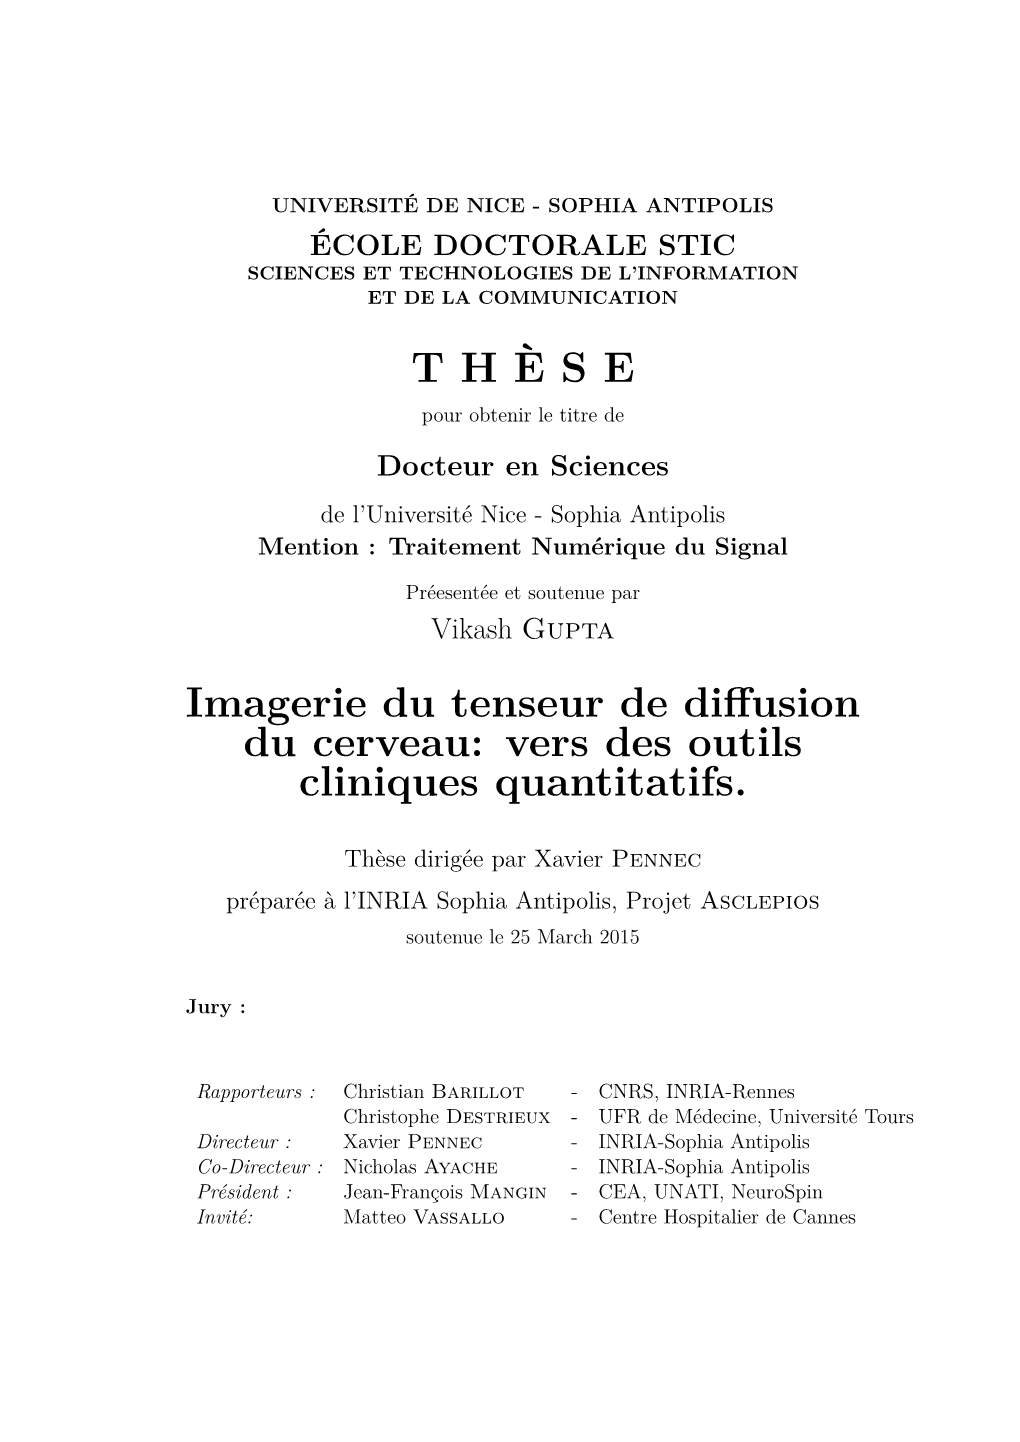 "Diffusion Tensor Imaging of the Brain: Towards Quantitative Clinical Tools"